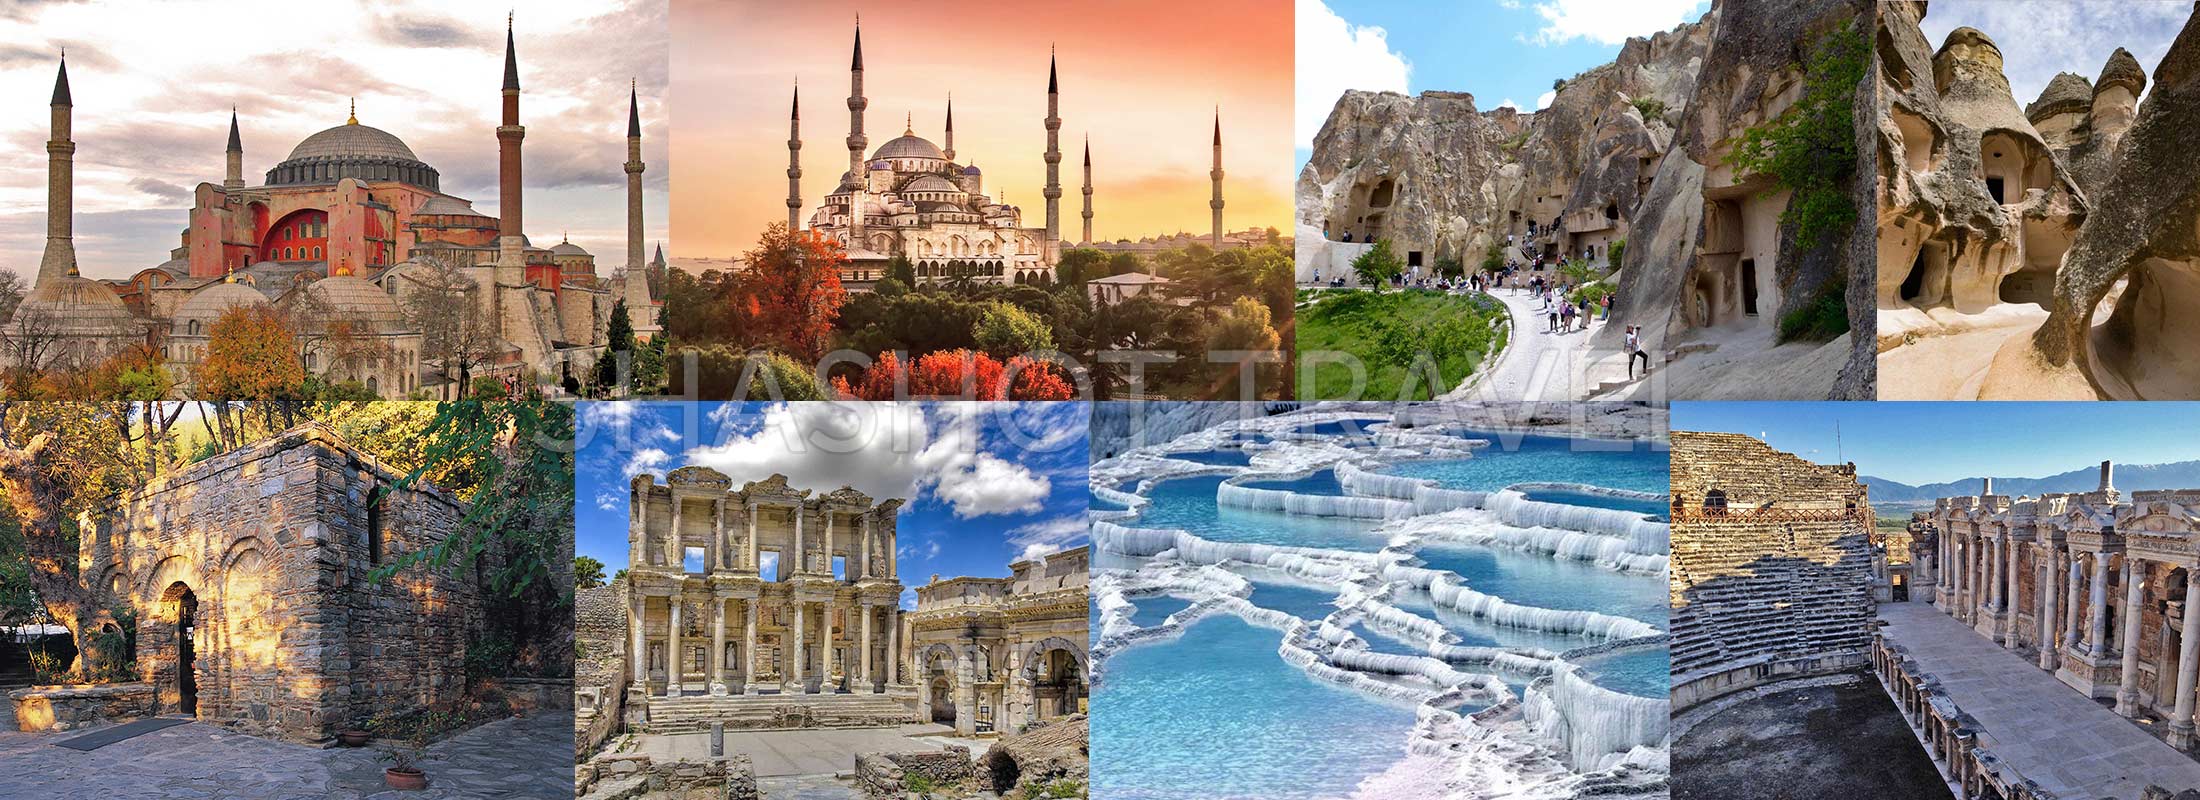 turkey-package-tours-7-days-istanbul-hagia-sophia-museum-blue-mosque-cappadocia-virgin-mary-hourse-ephesus-pamukkale-hierapolis-by-flight